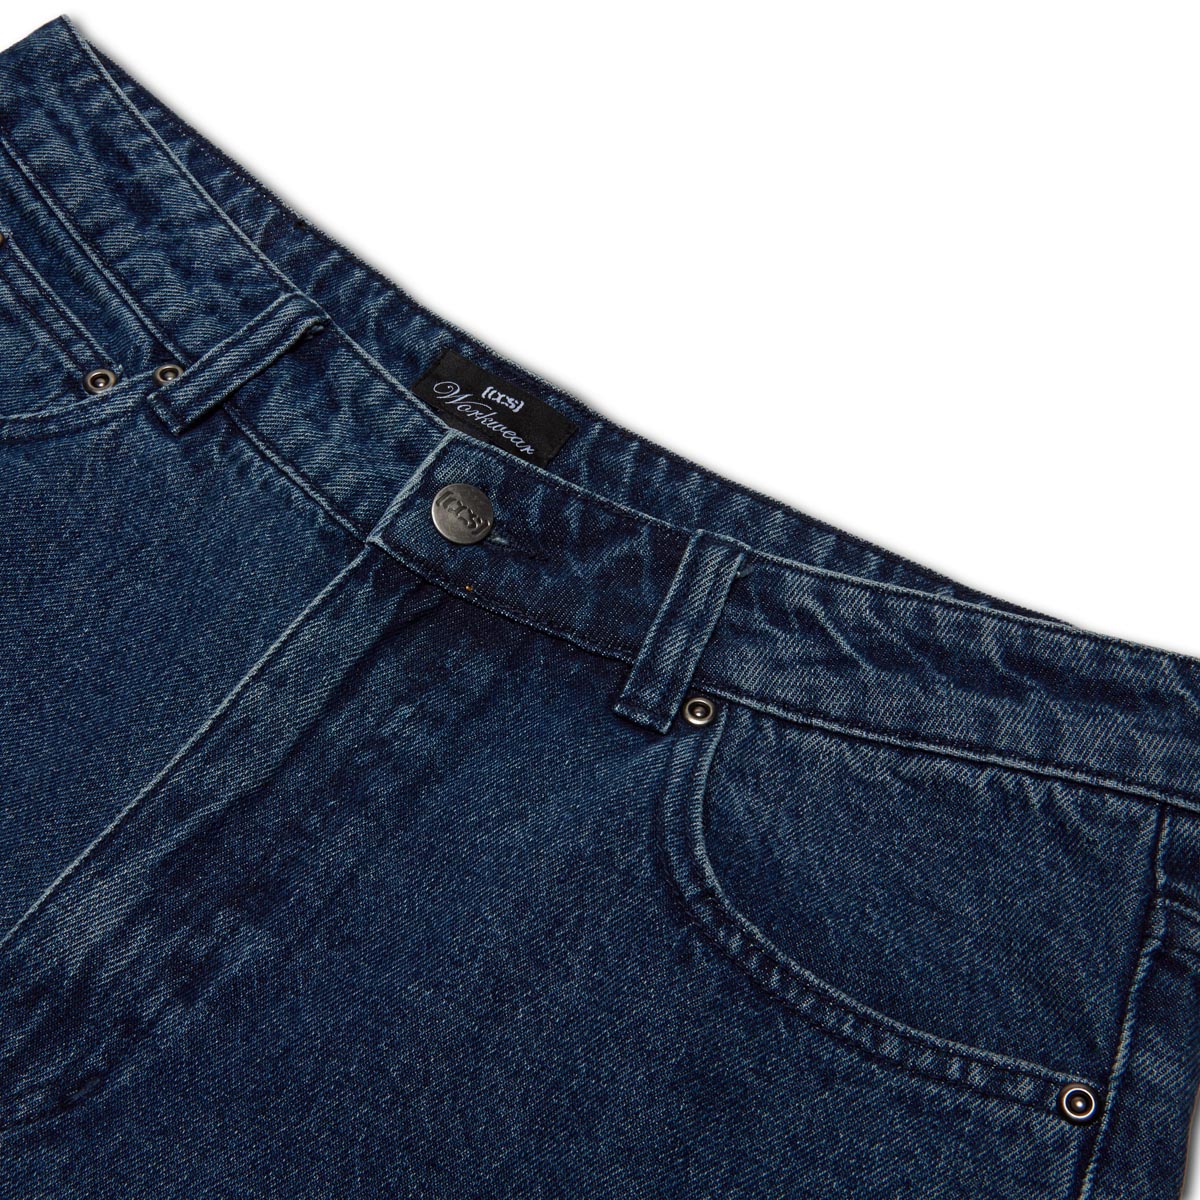 CCS Double Knee Original Relaxed Denim Jeans - True Blue image 5